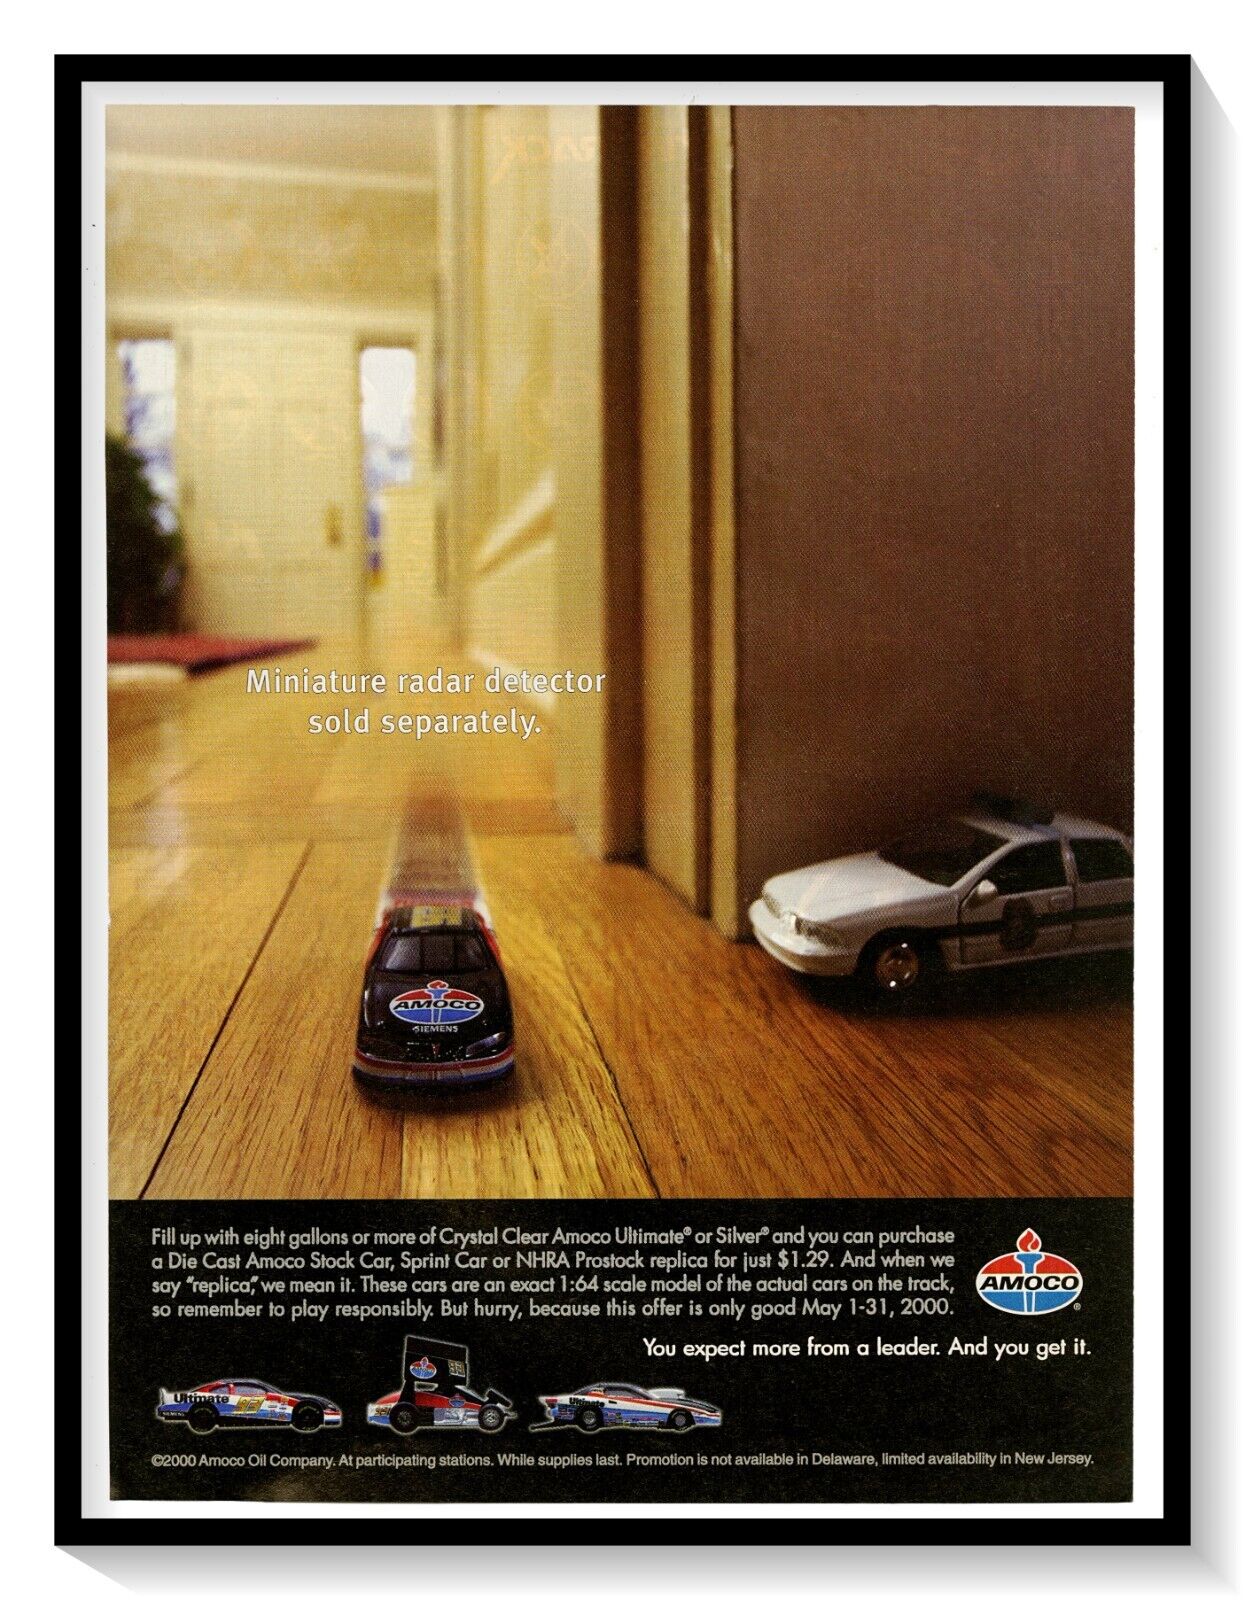 Amoco Die Cast Race Car Replicas Premium Ad Vintage 2000 Magazine Advertisement